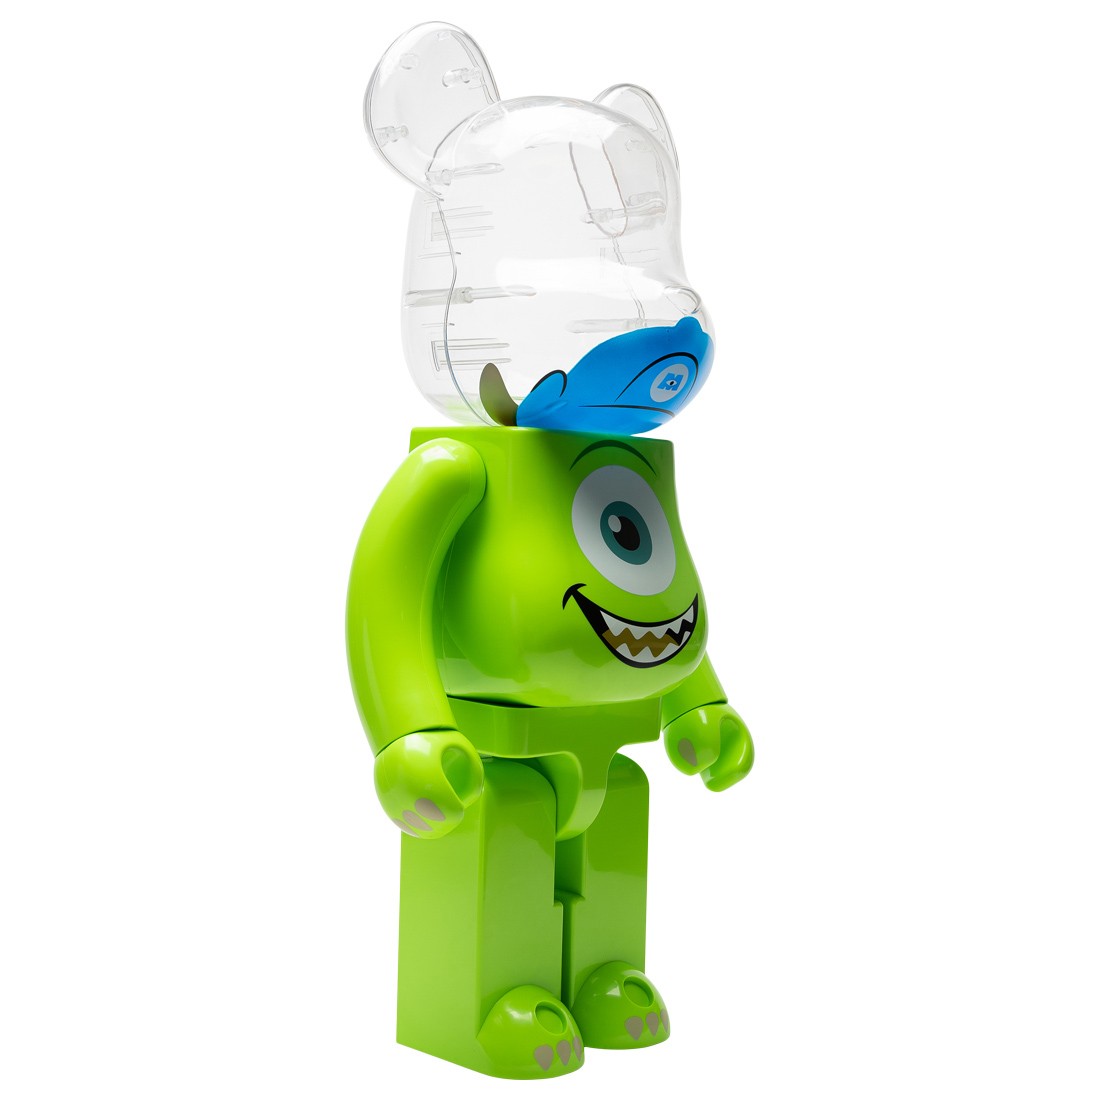 Medicom Disney Pixar Monsters Inc. Mike 1000% Bearbrick Figure (green)